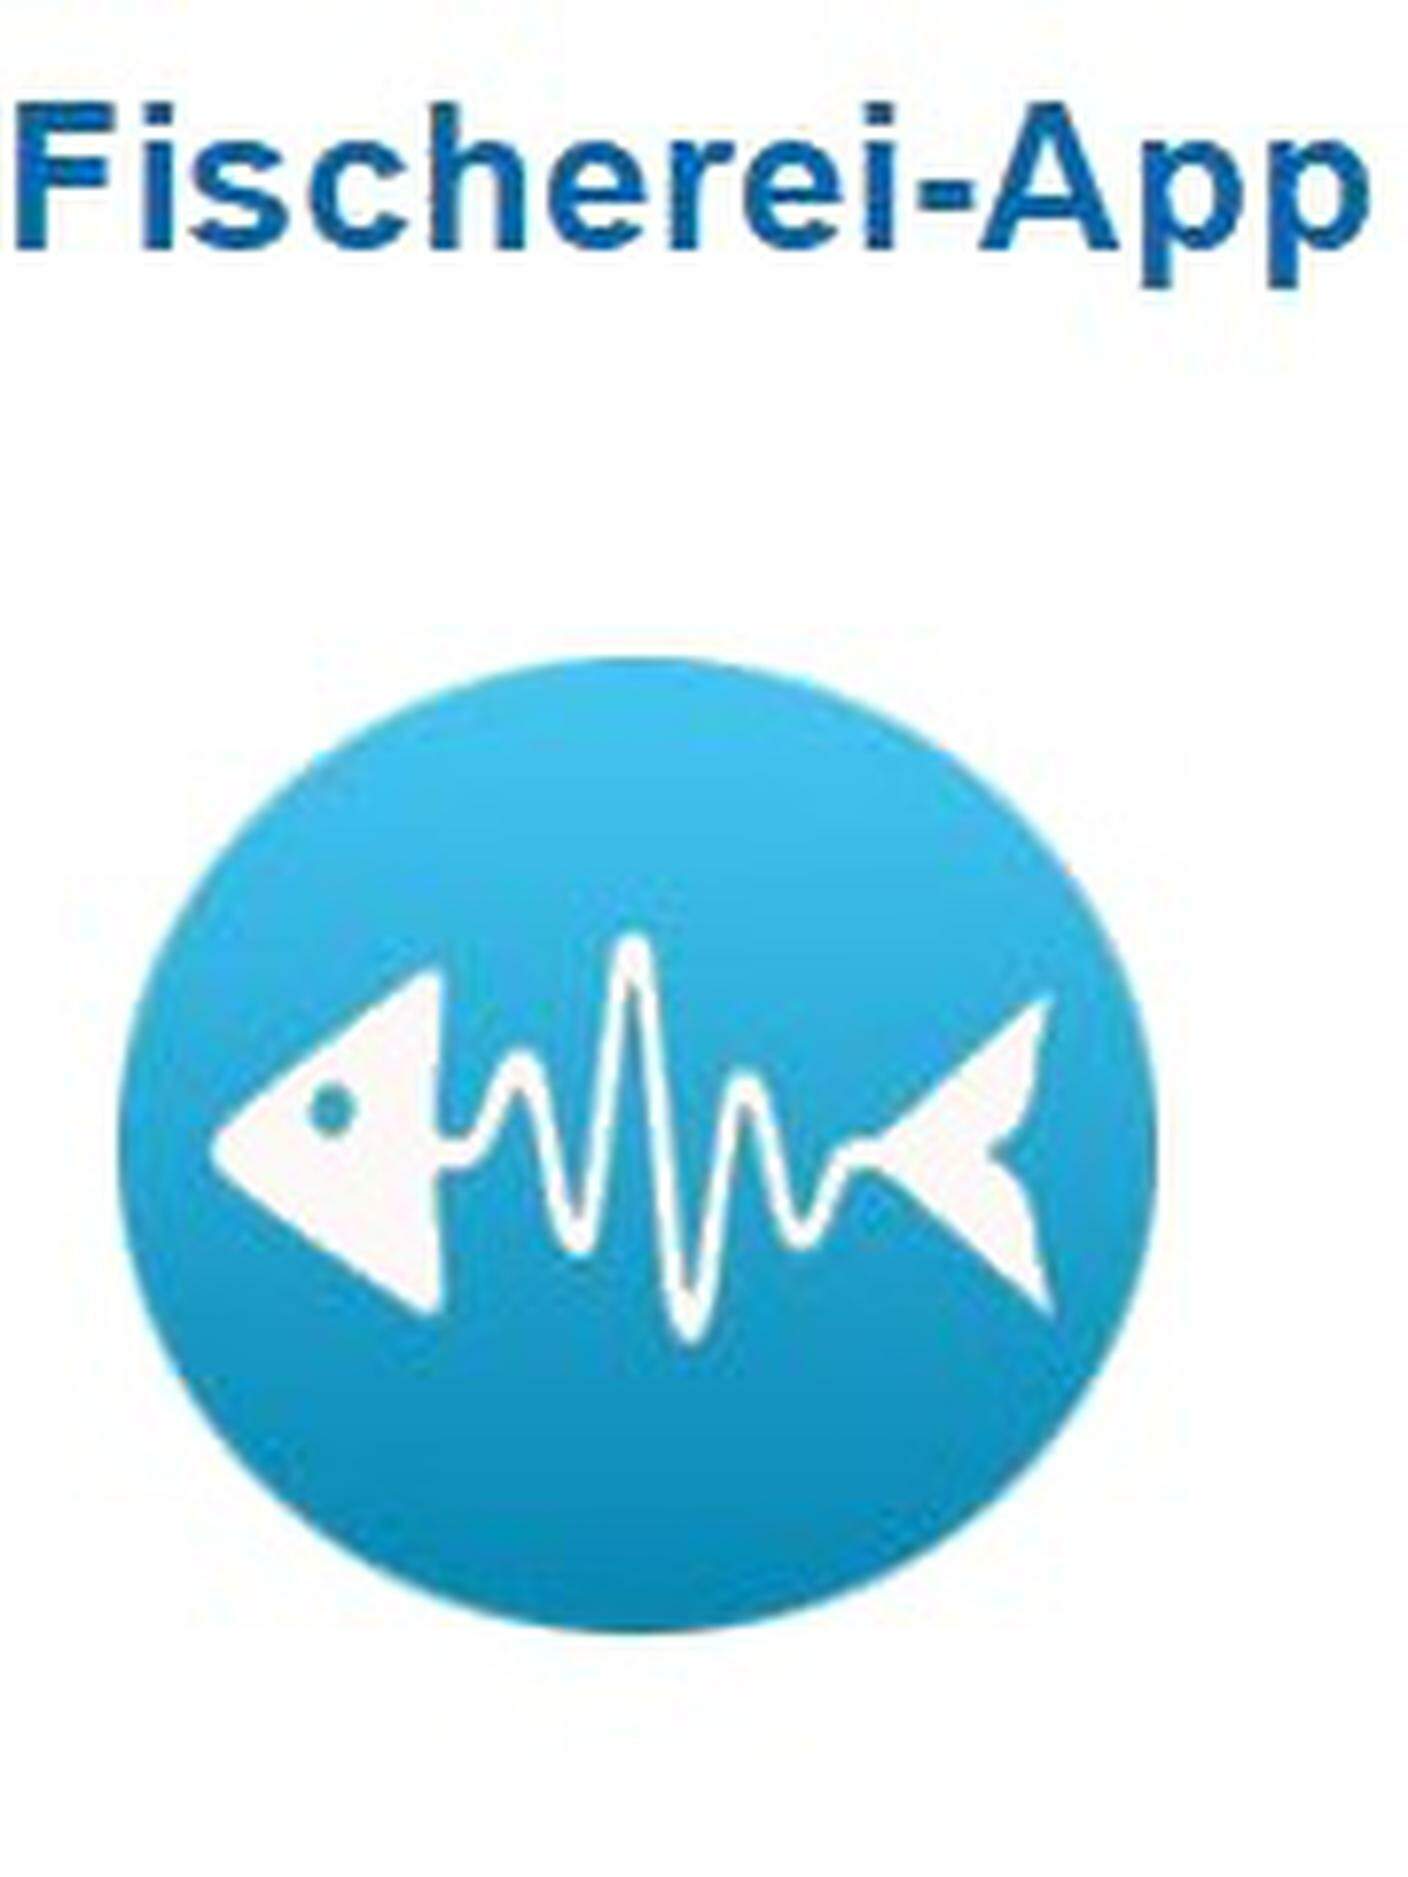 L'app dei pescatori.JPG